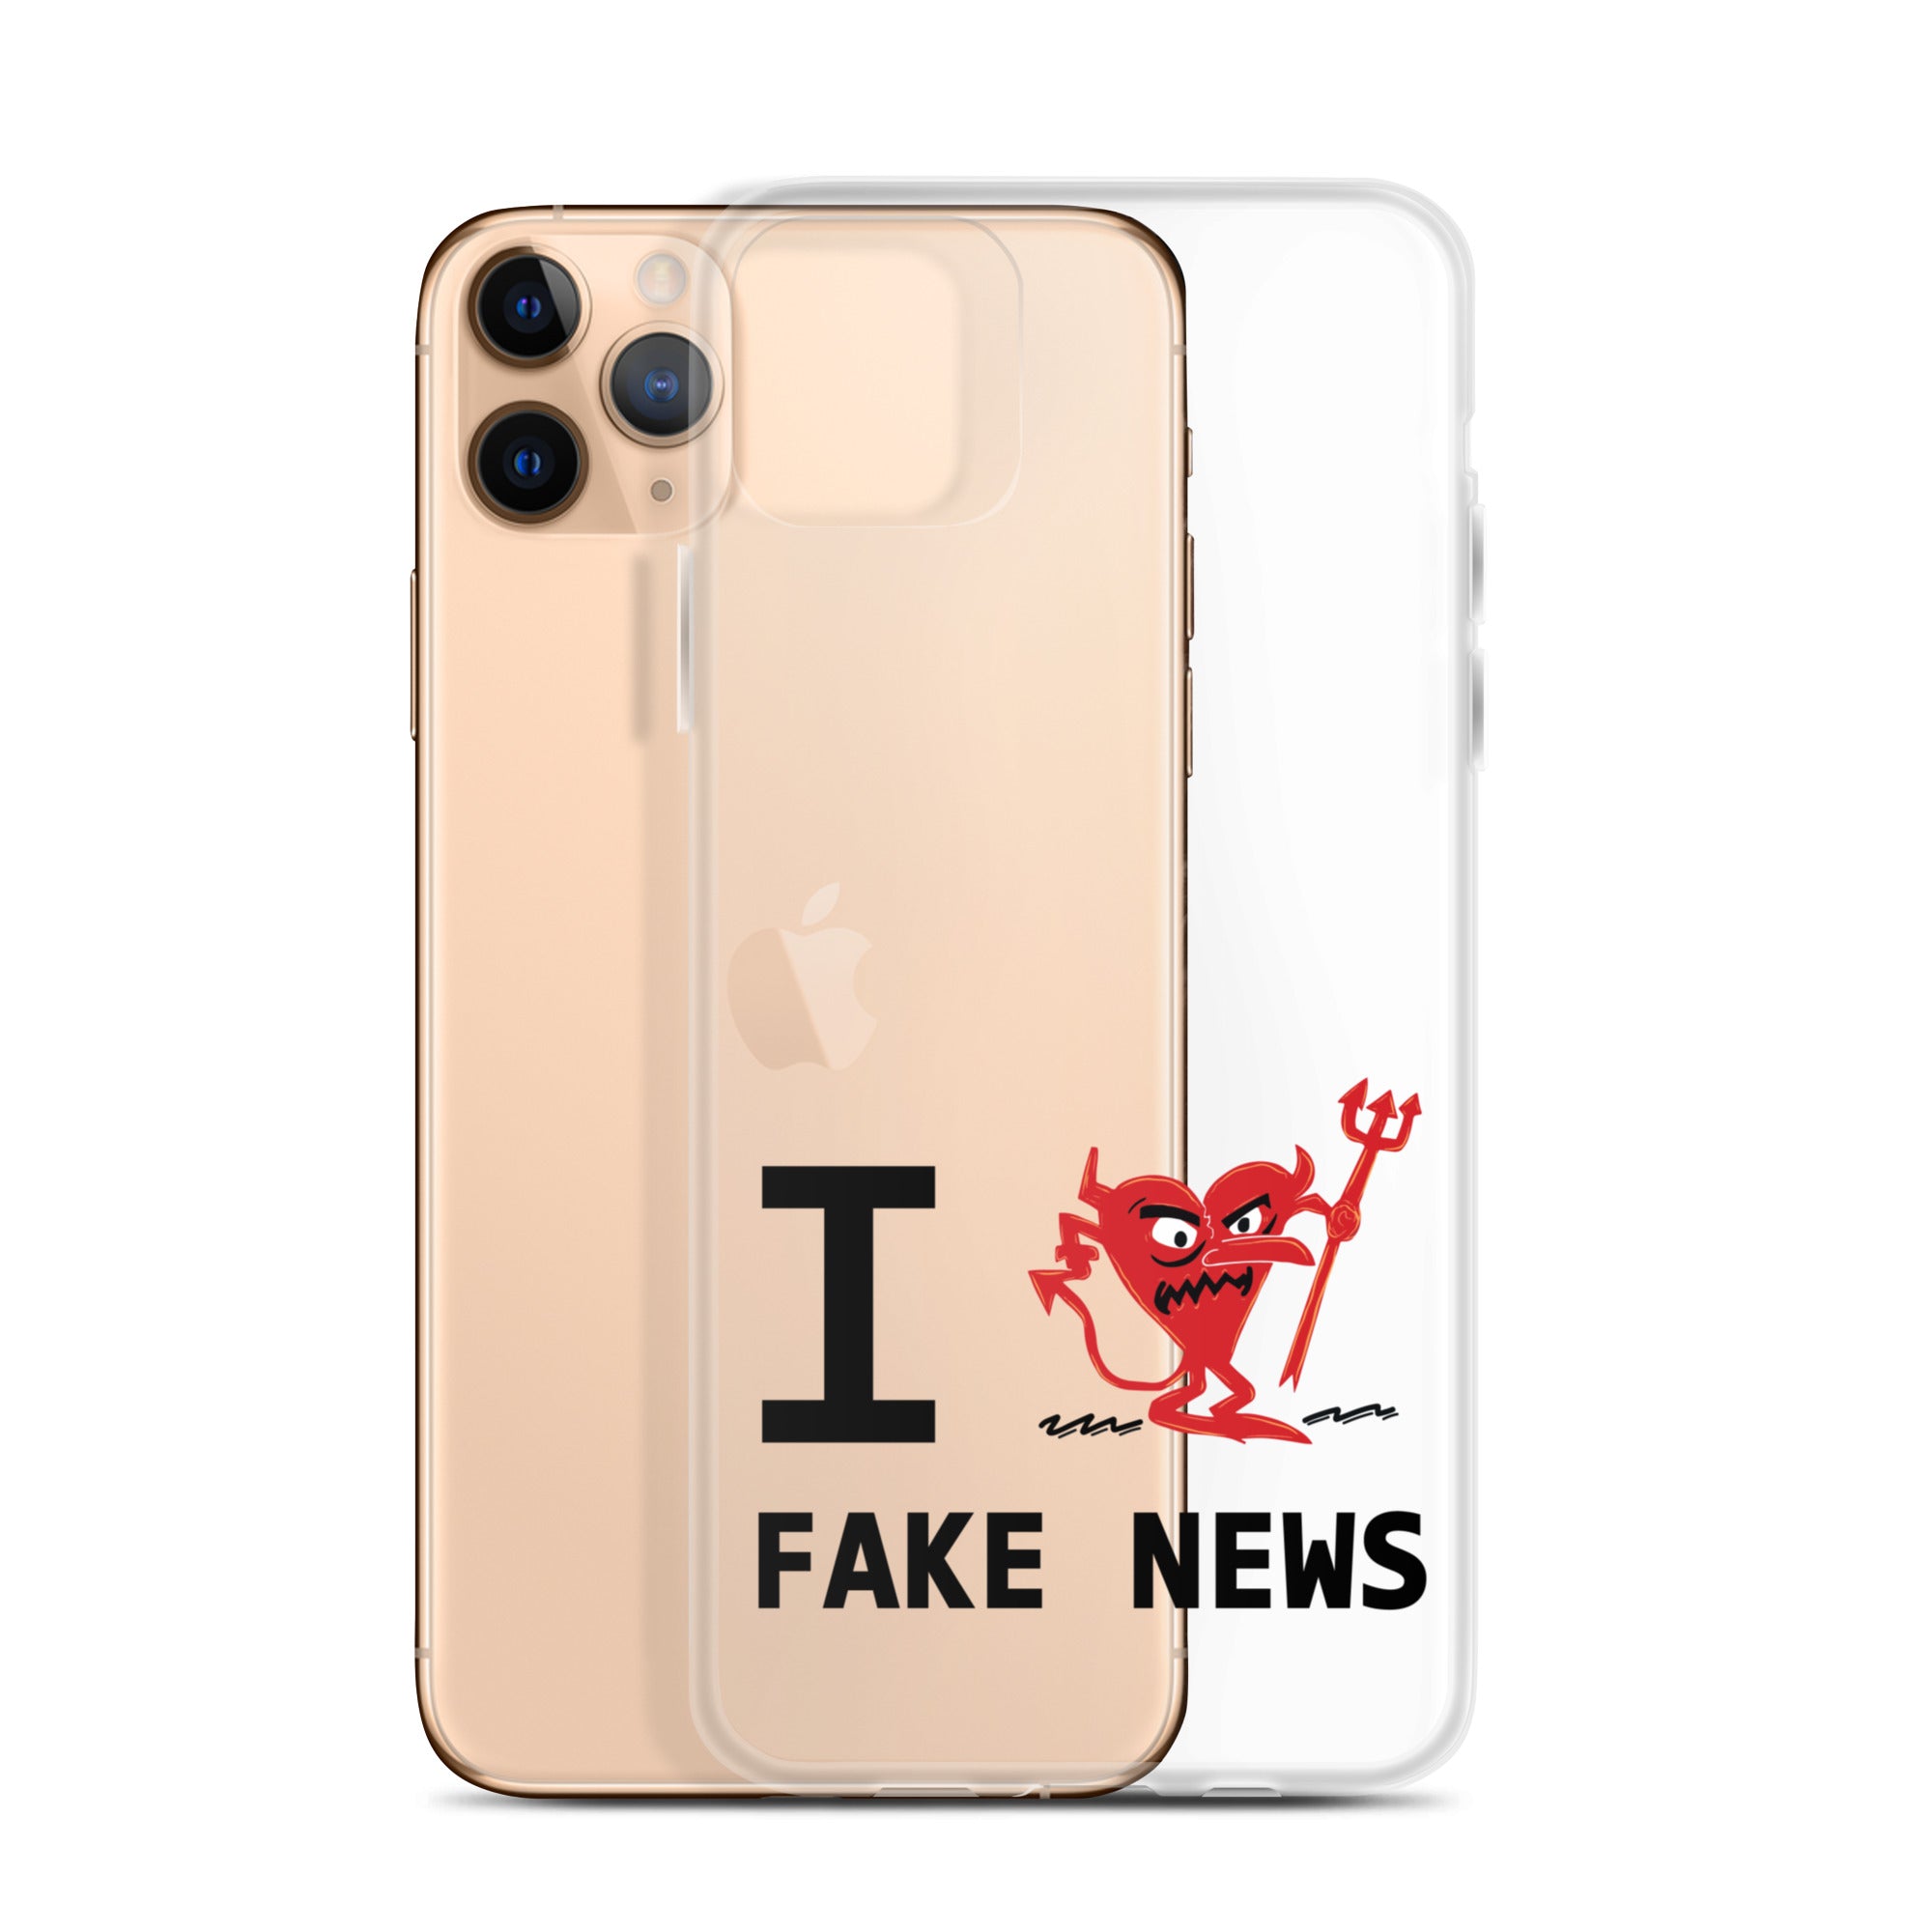 FAKE NEWS iPhone Case